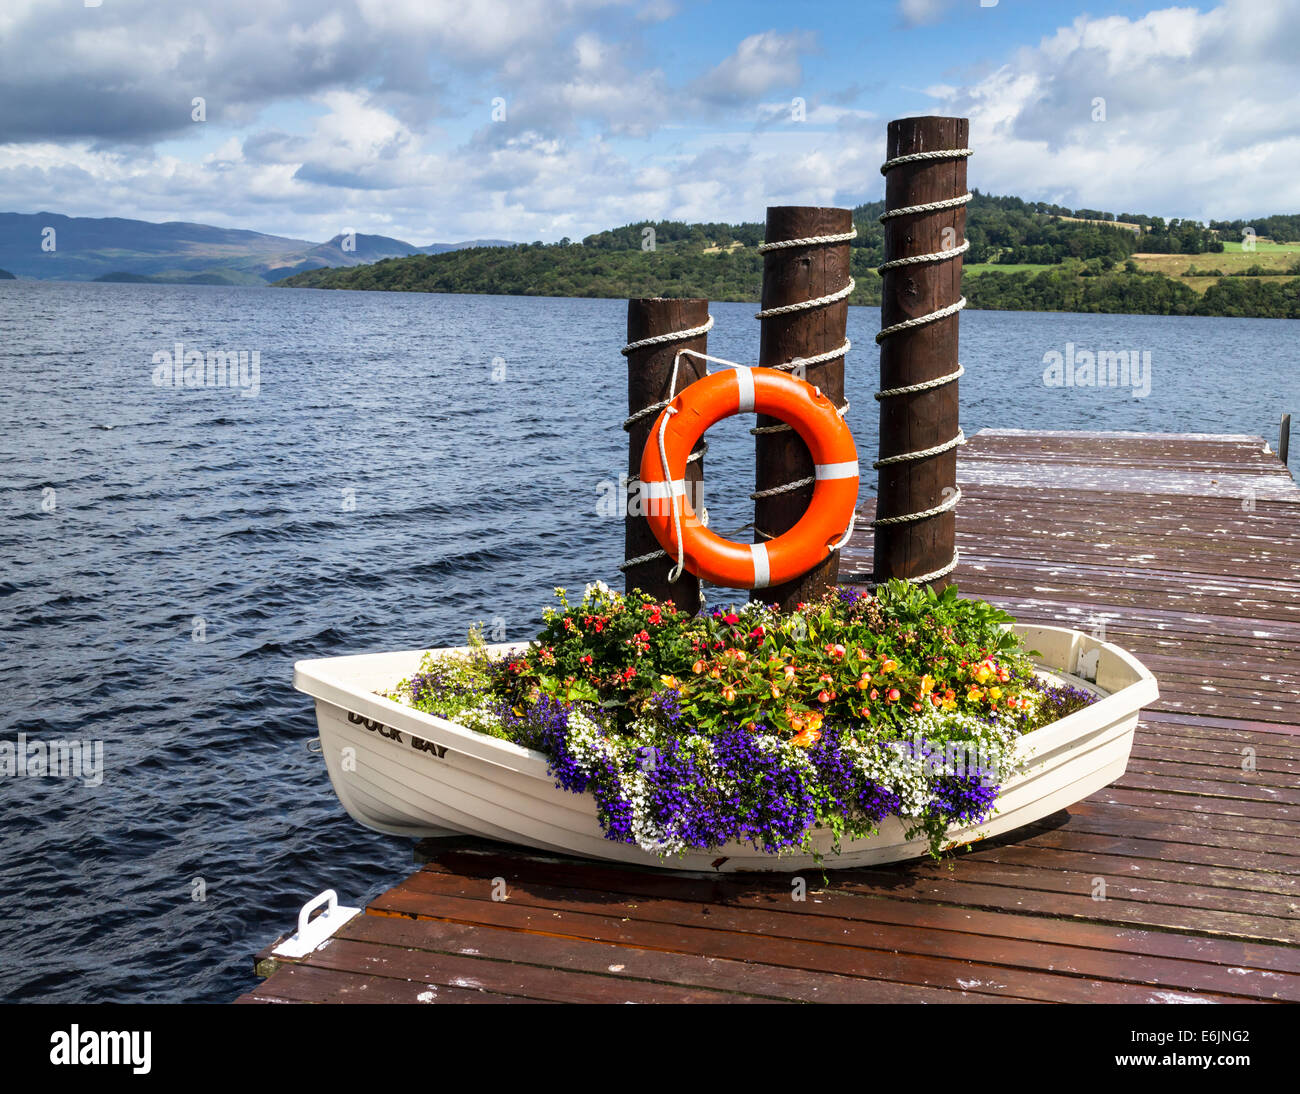 Display floreale in una piccola barca su un molo al Baia d'anatra, Loch Lomond,Scozia. Foto Stock